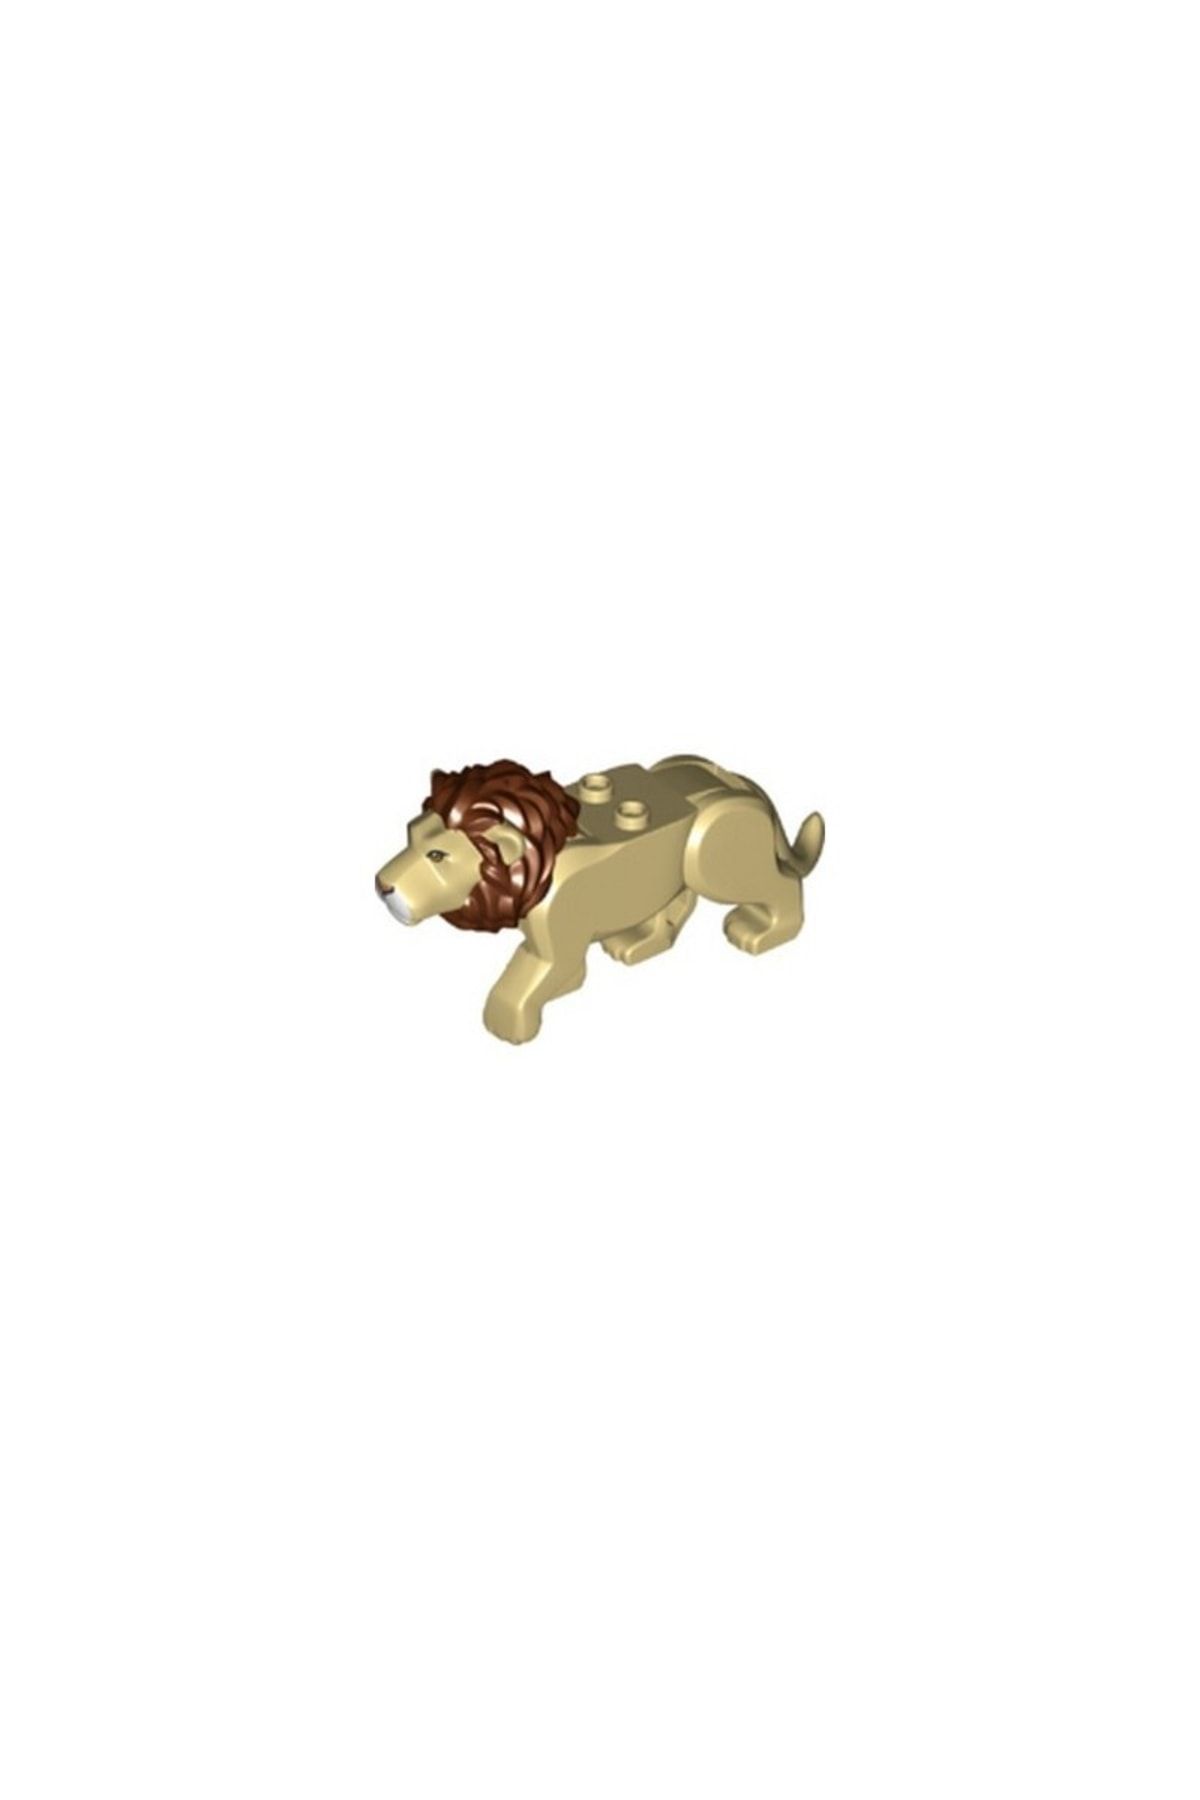 LEGO Orjinal Aslan Lion Cat